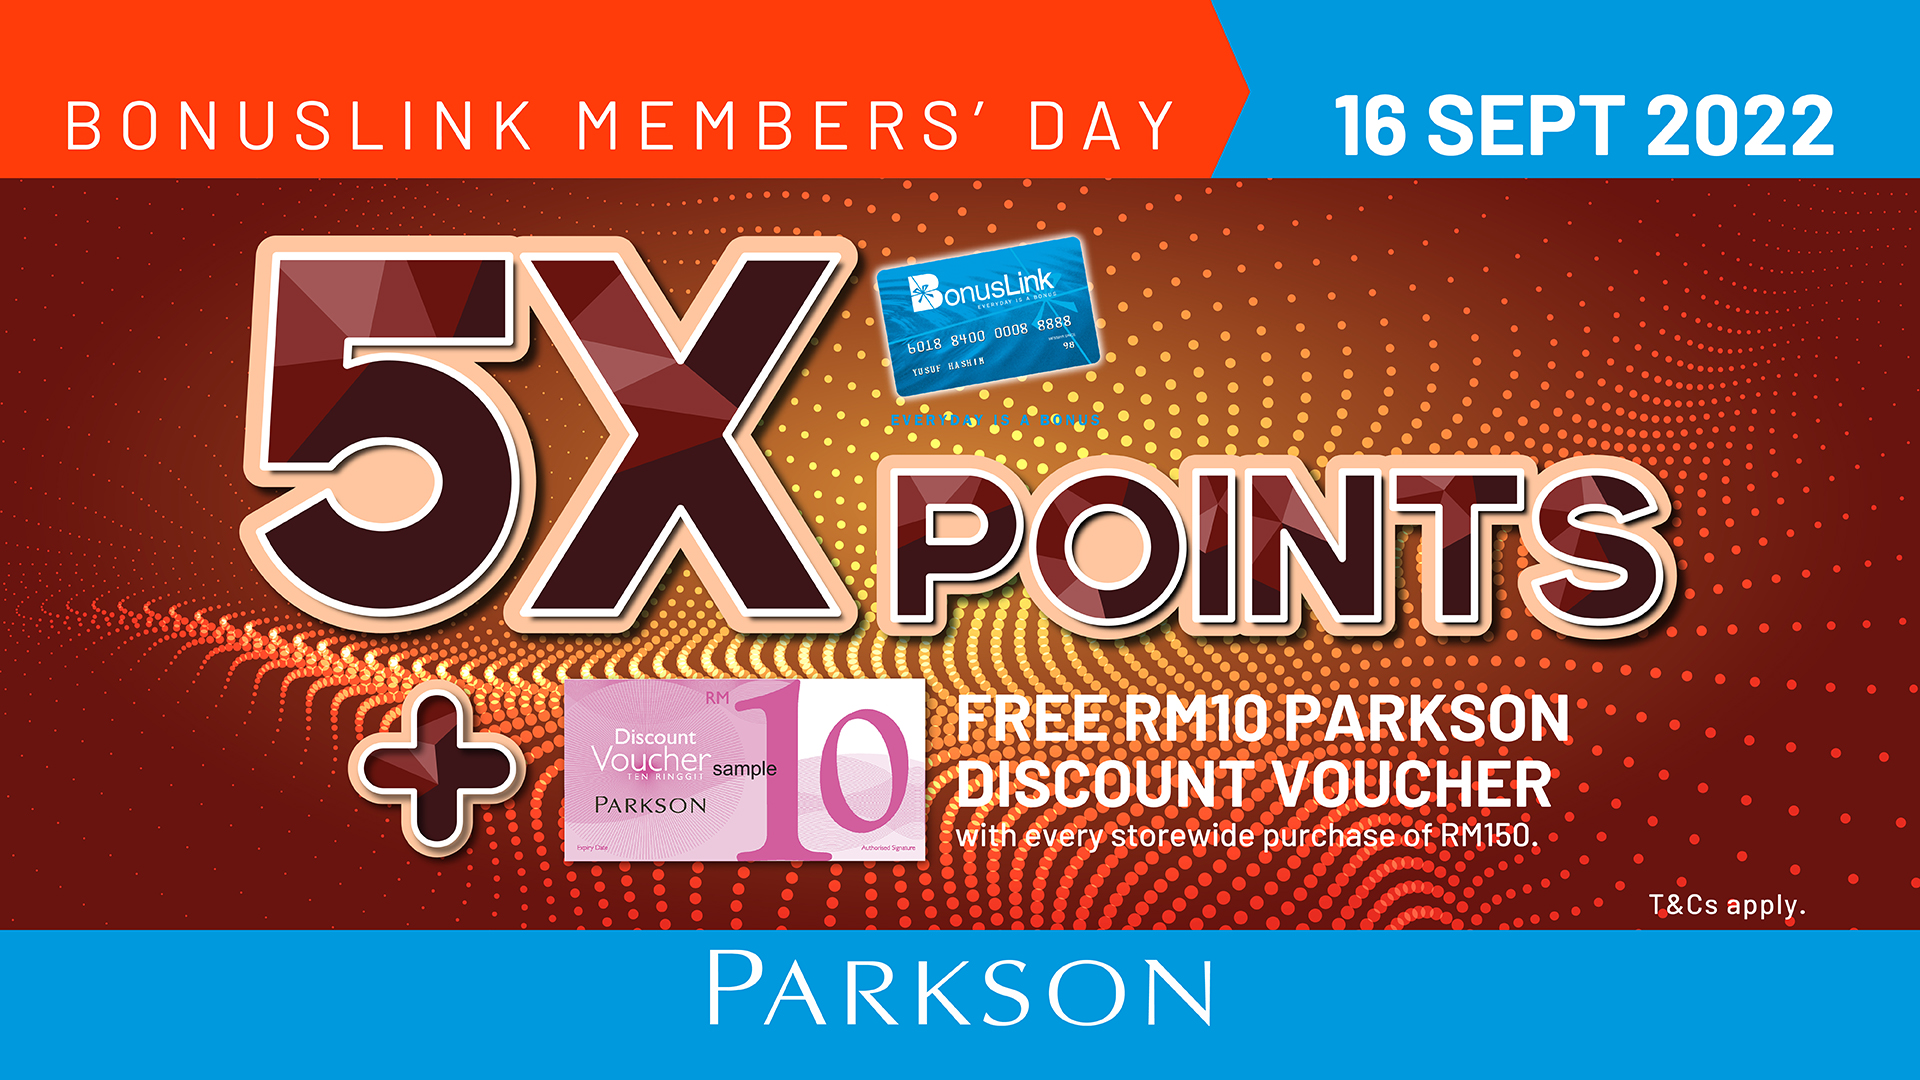 22 Apr 2022: Parkson Bonuslink Members Day 5X Points Promotion 